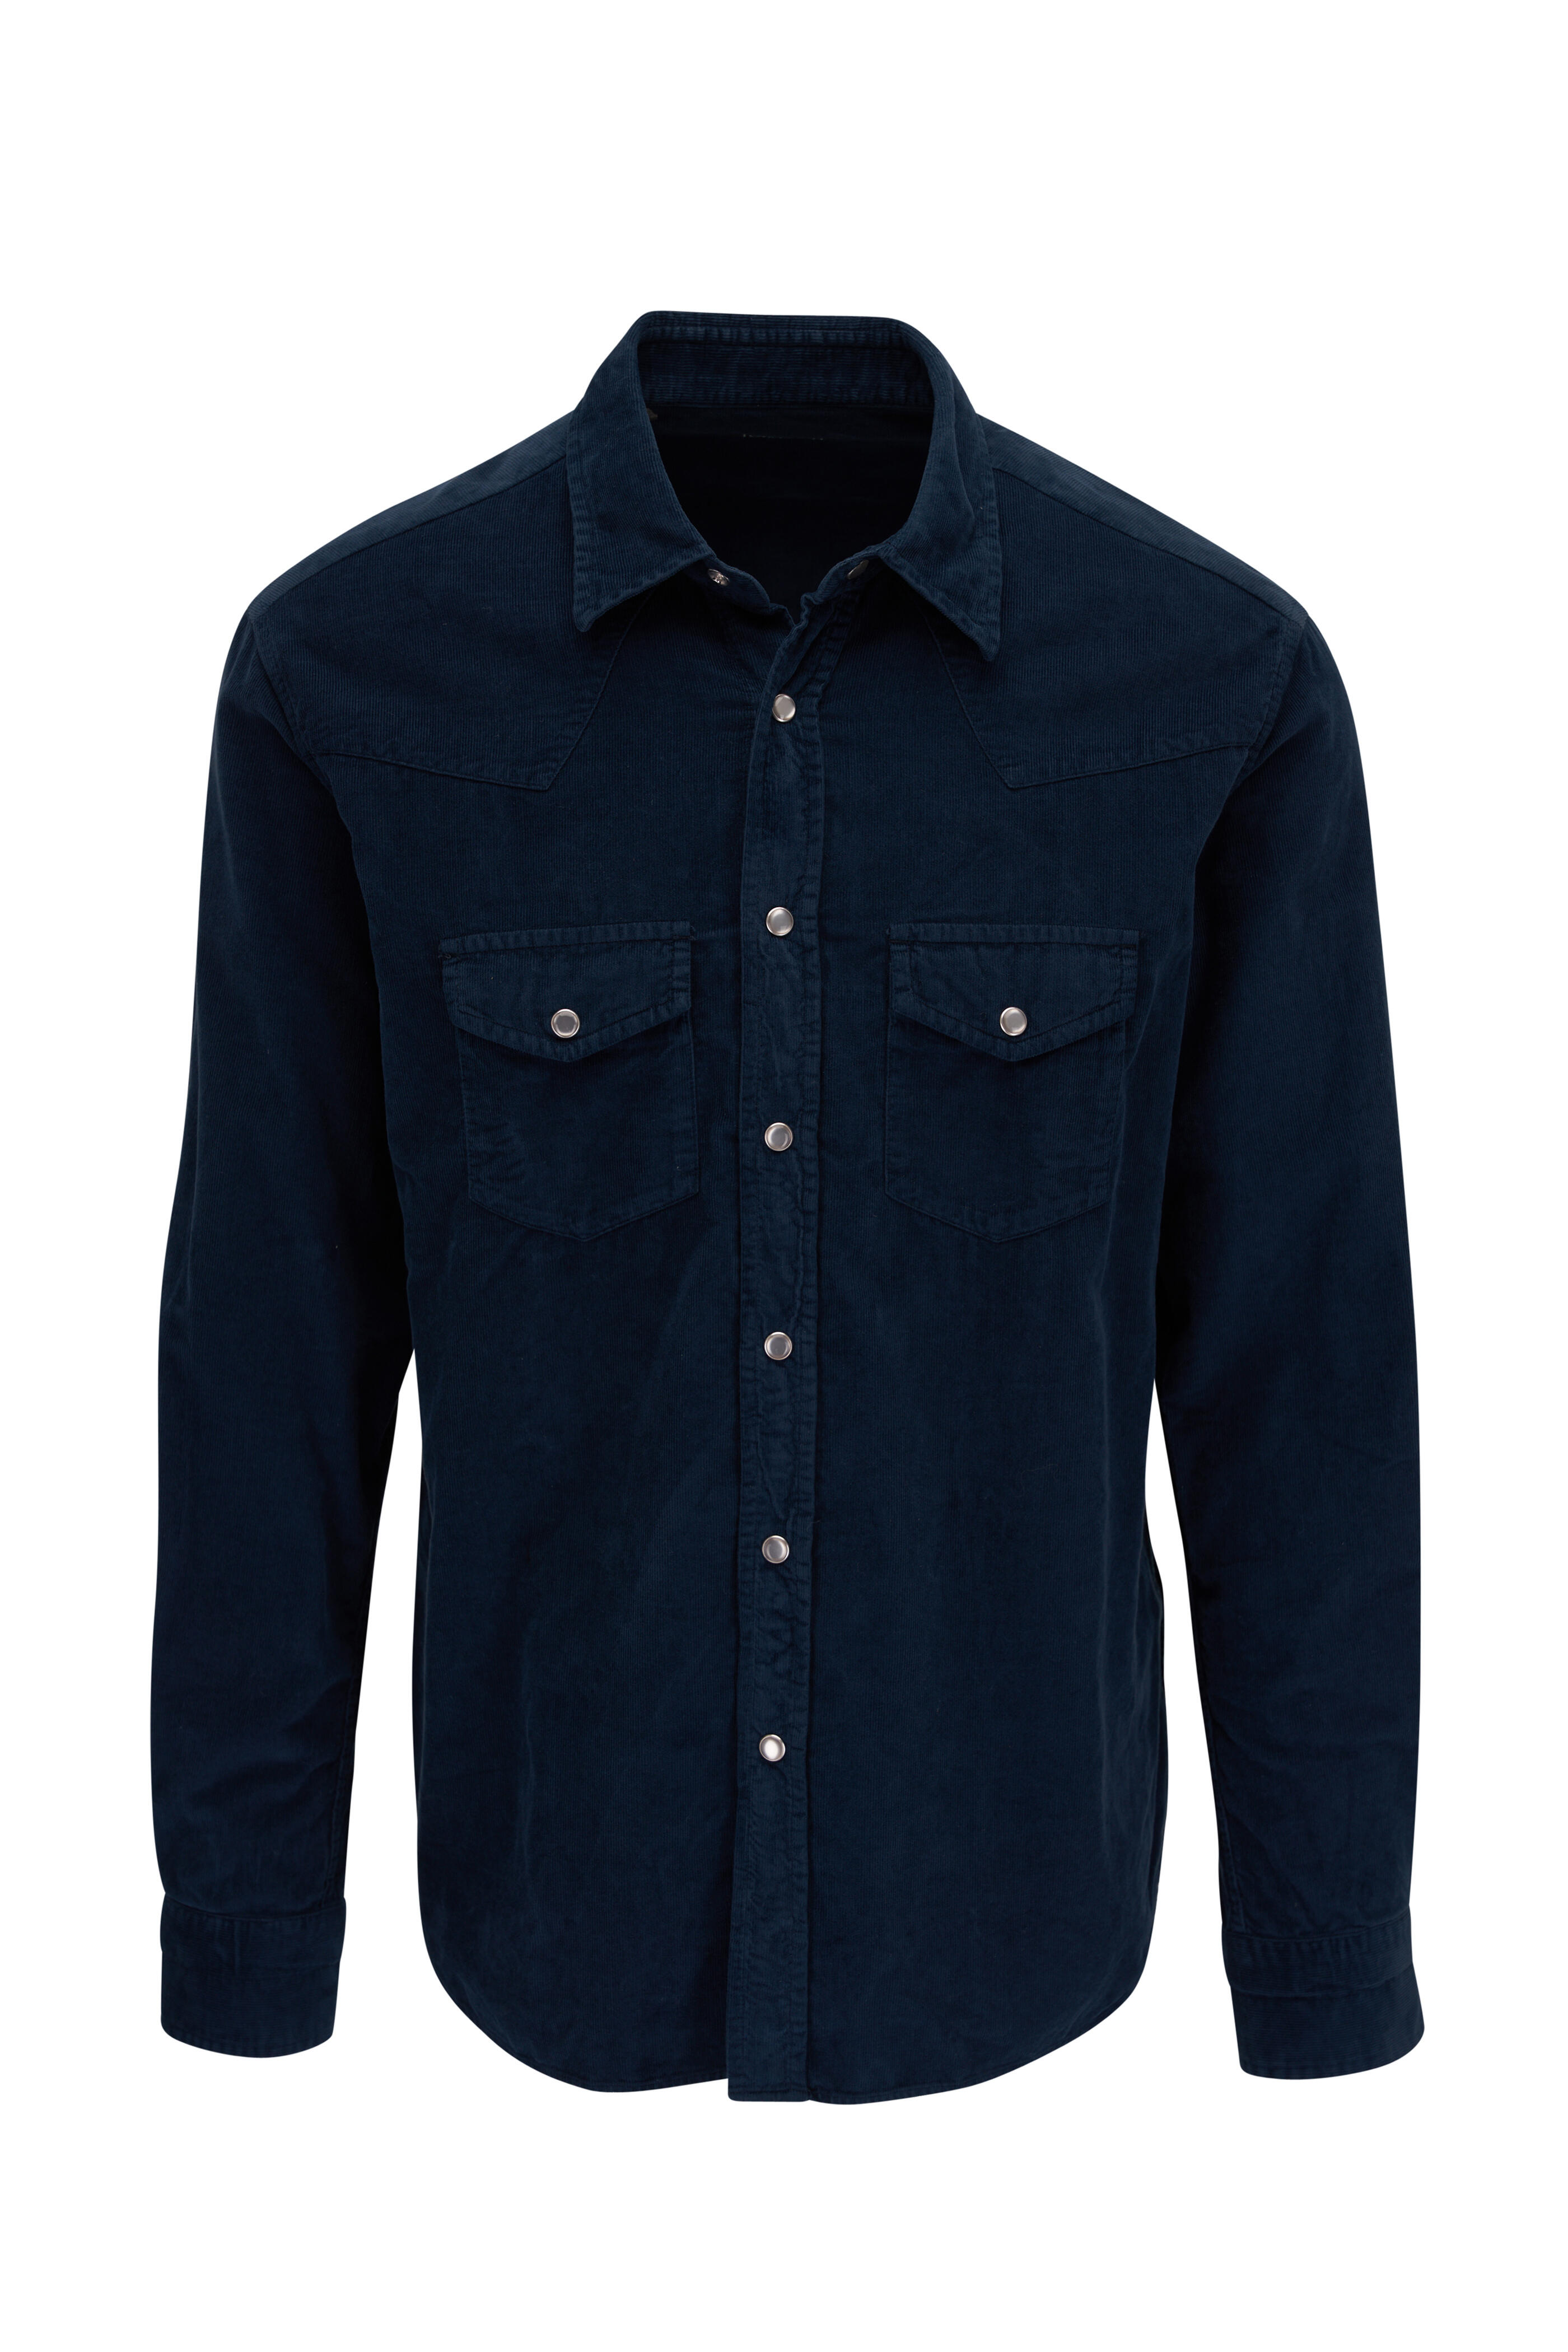 Tom Ford - Navy Corduroy Western Shirt | Mitchell Stores